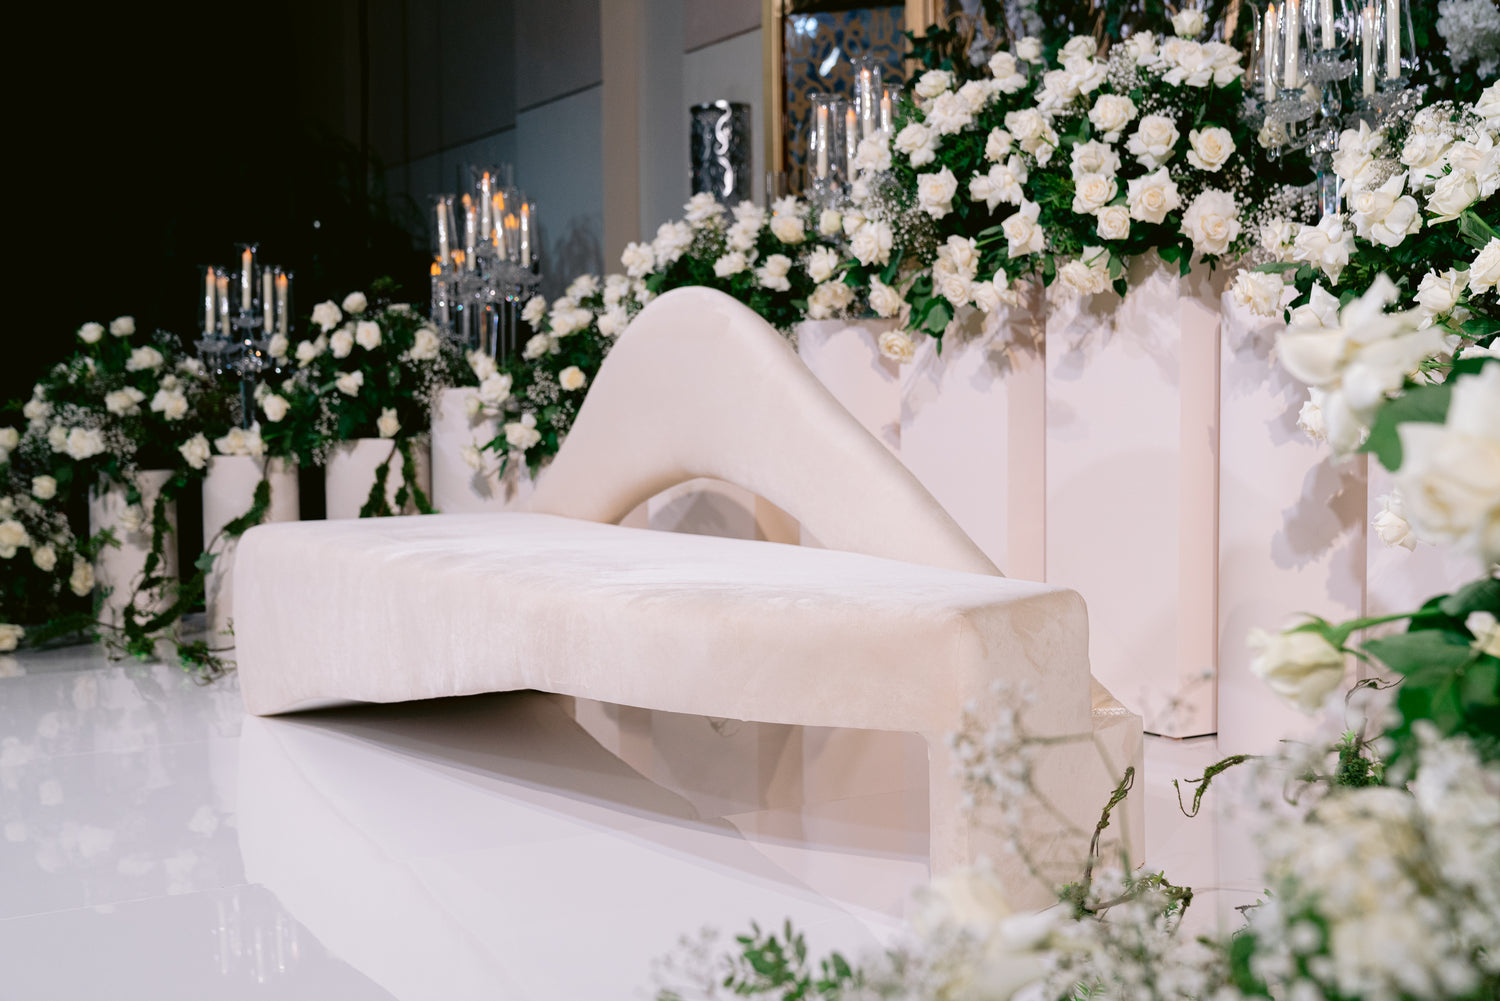 Wedding Decoration Packages| Price | Olga Events Dubai Wedding Planner